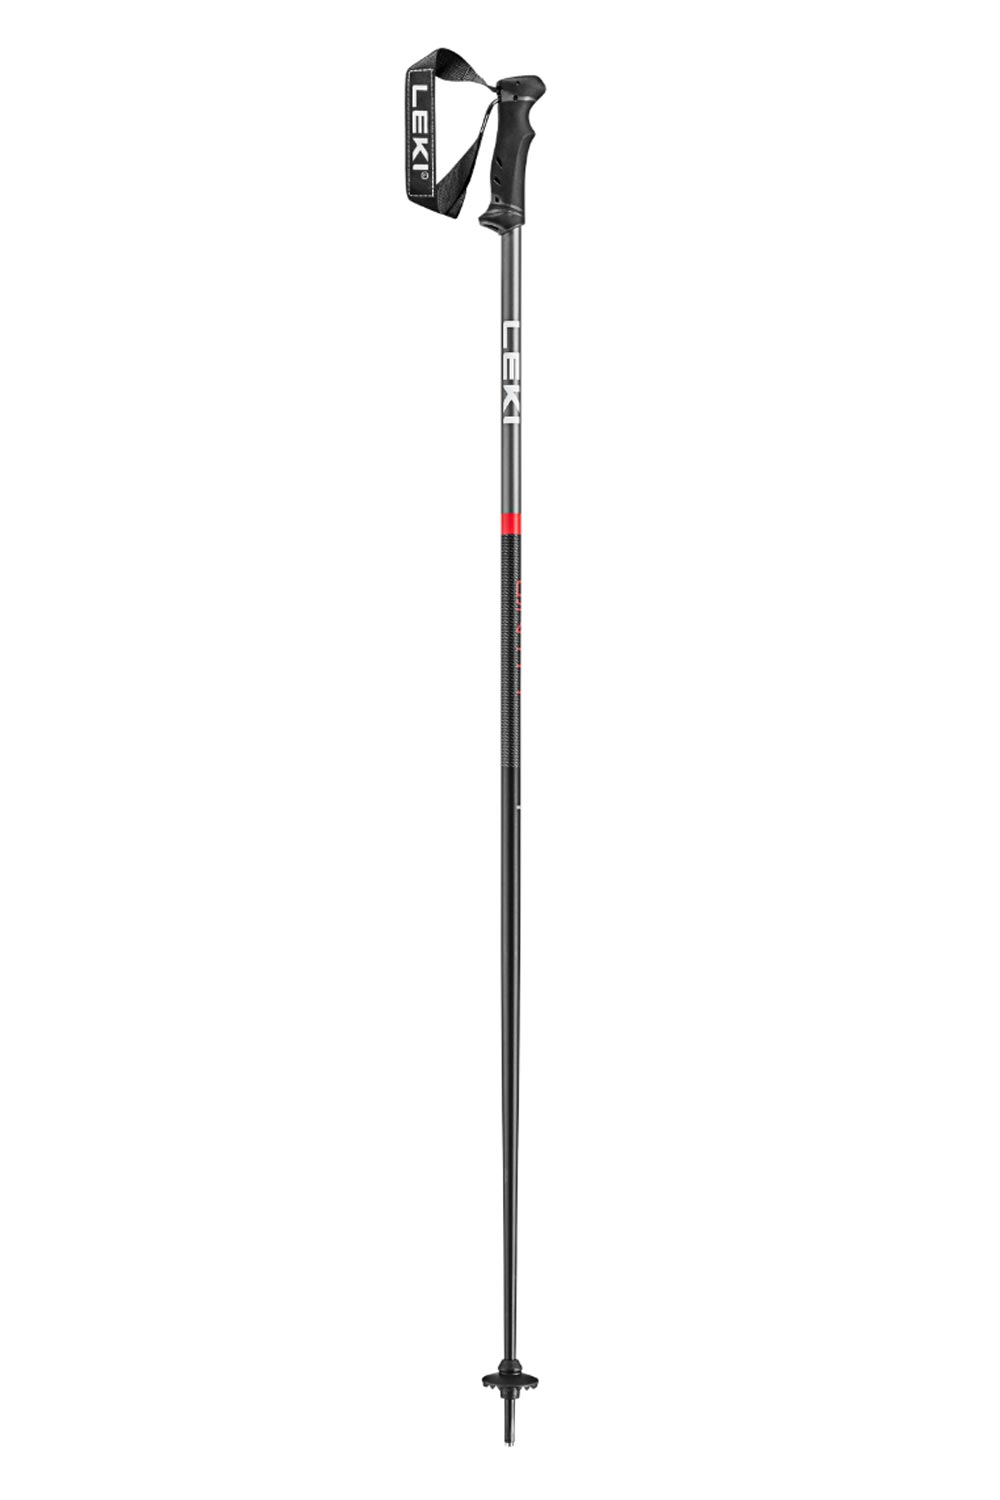 Leki ski pole, black with red accent